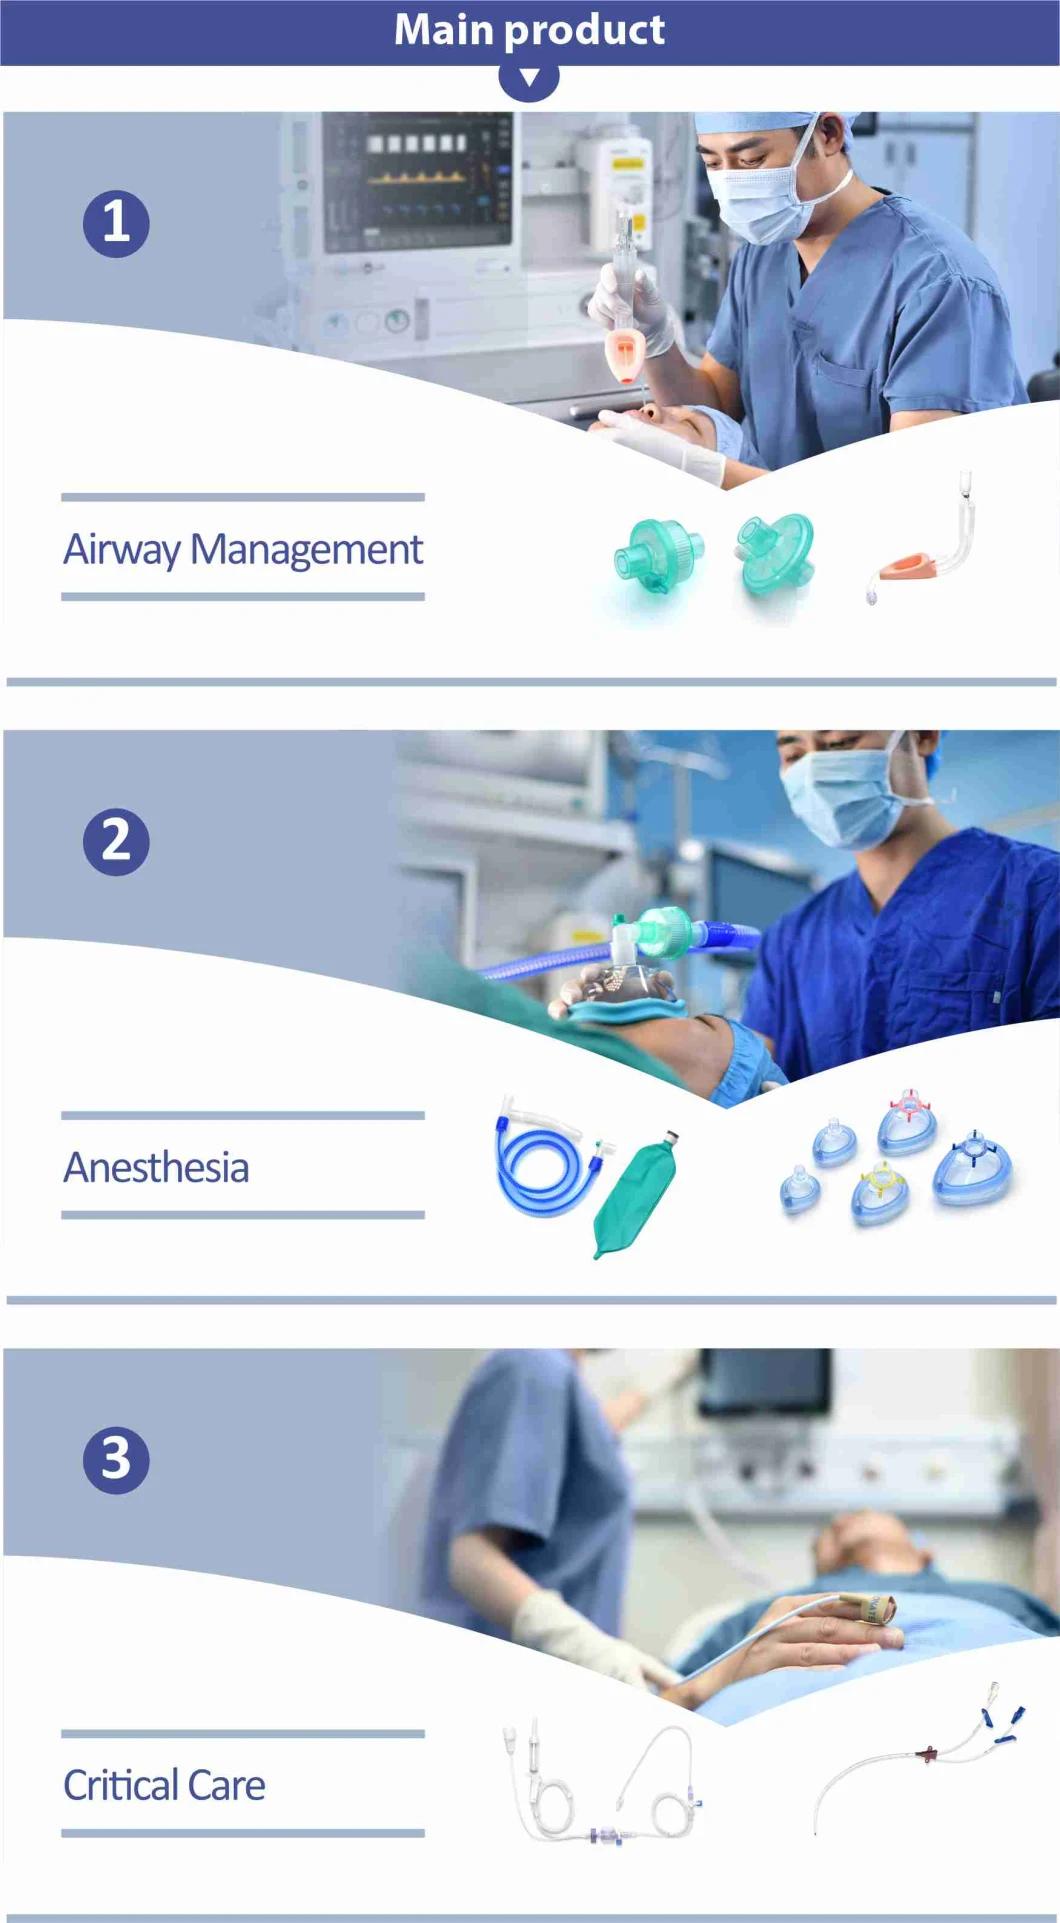 Hisern Medical HS-Vl01 Anesthesia Video Laryngoscope